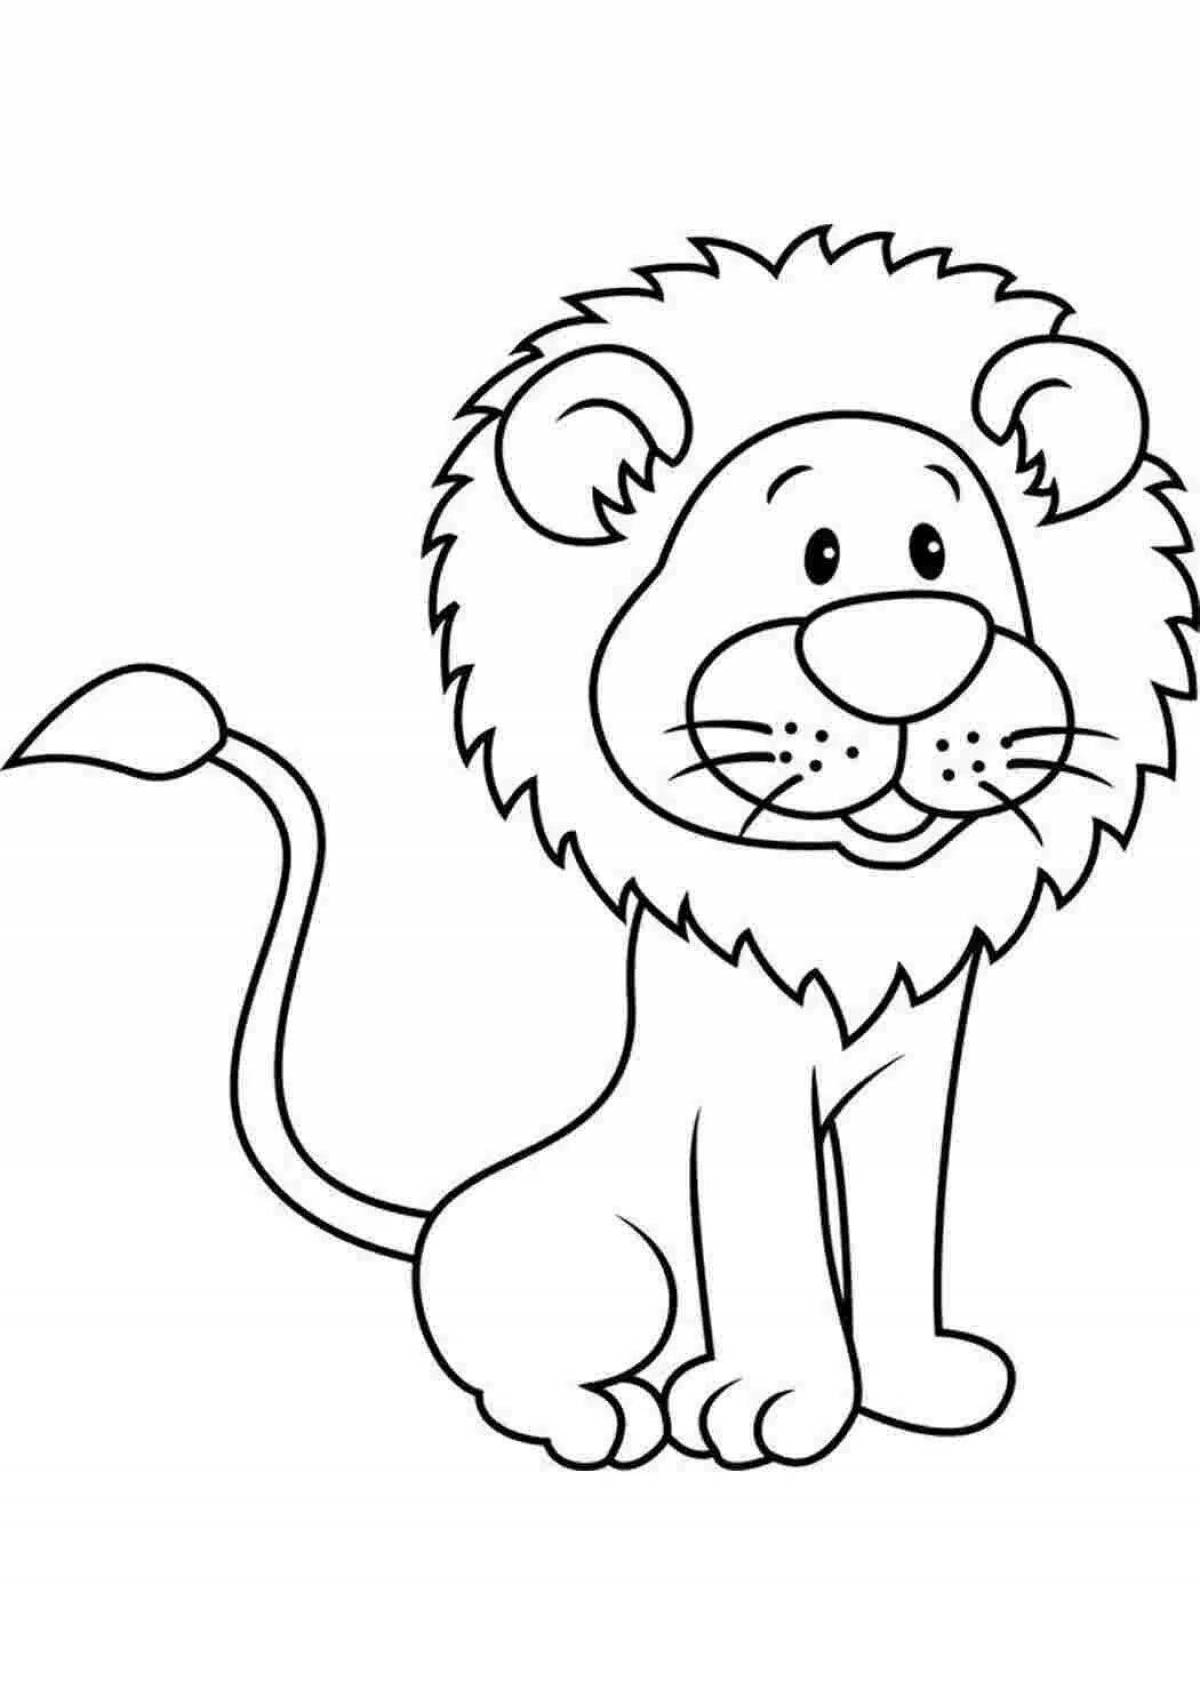 Adorable lion cub coloring book for kids